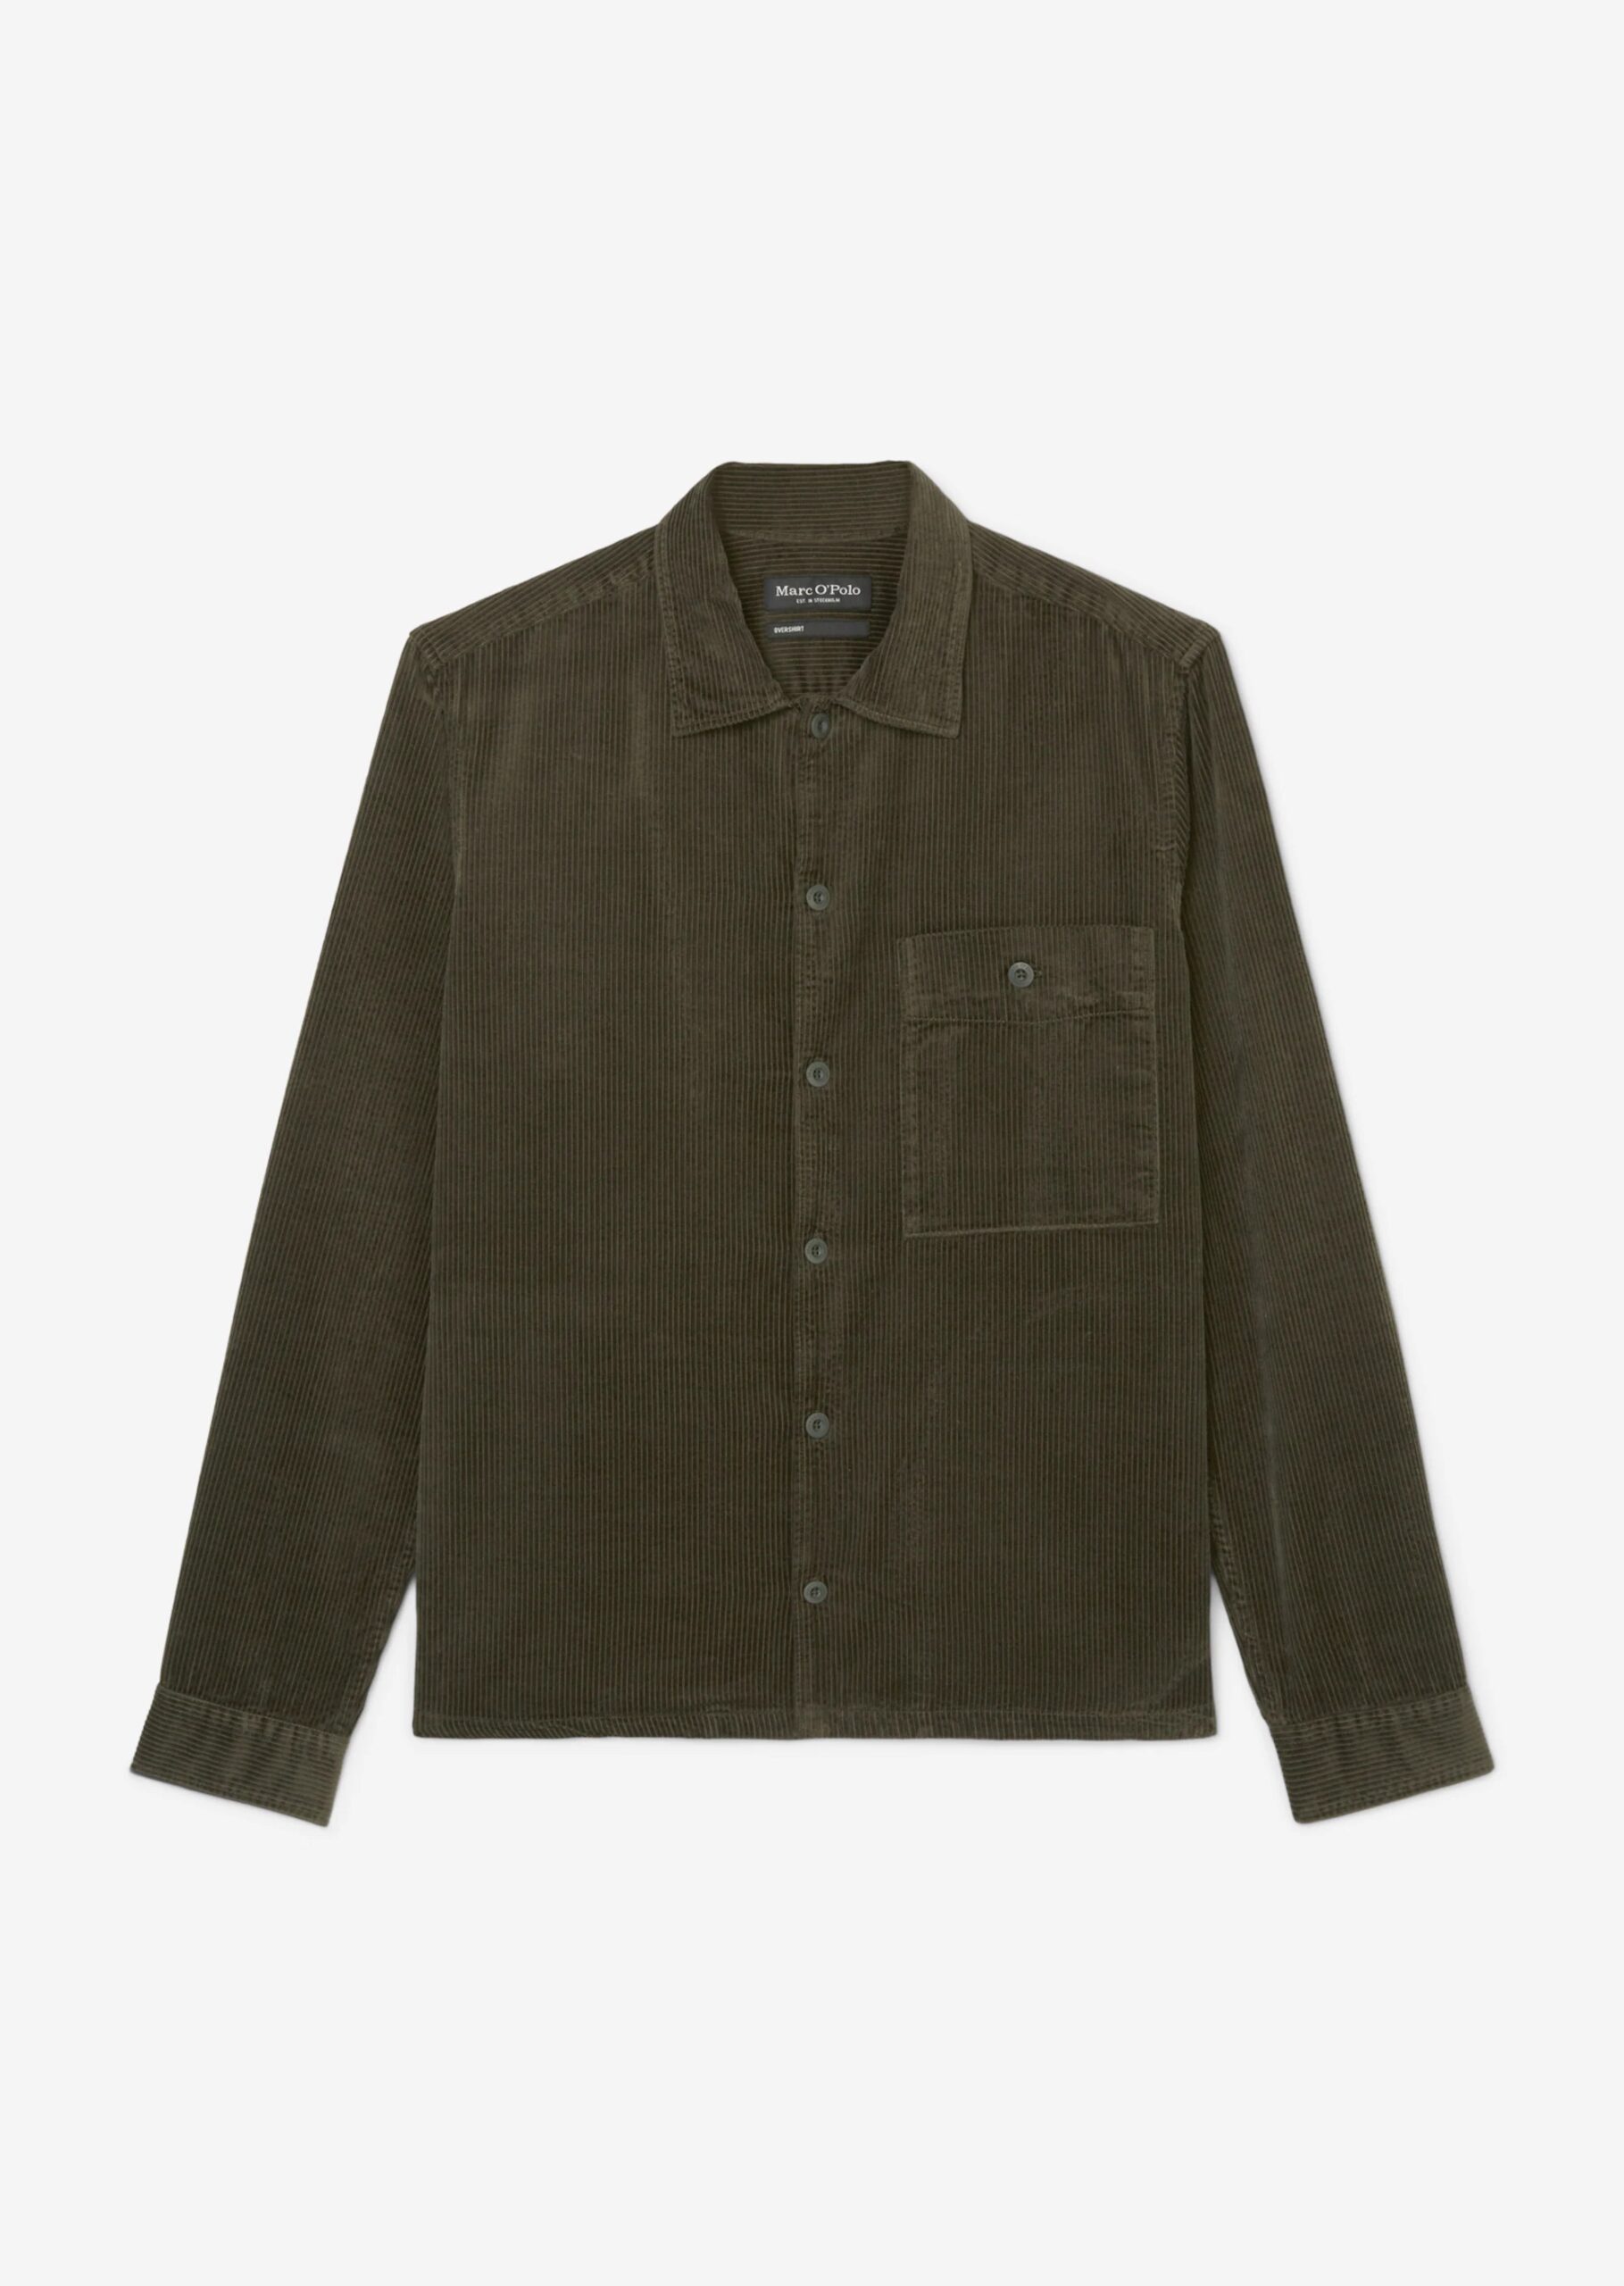 MARC O'POLO Kord-Langarm-Hemd regular aus reiner Bio-Baumwolle, copley  brown - Hartmann Mode Shop